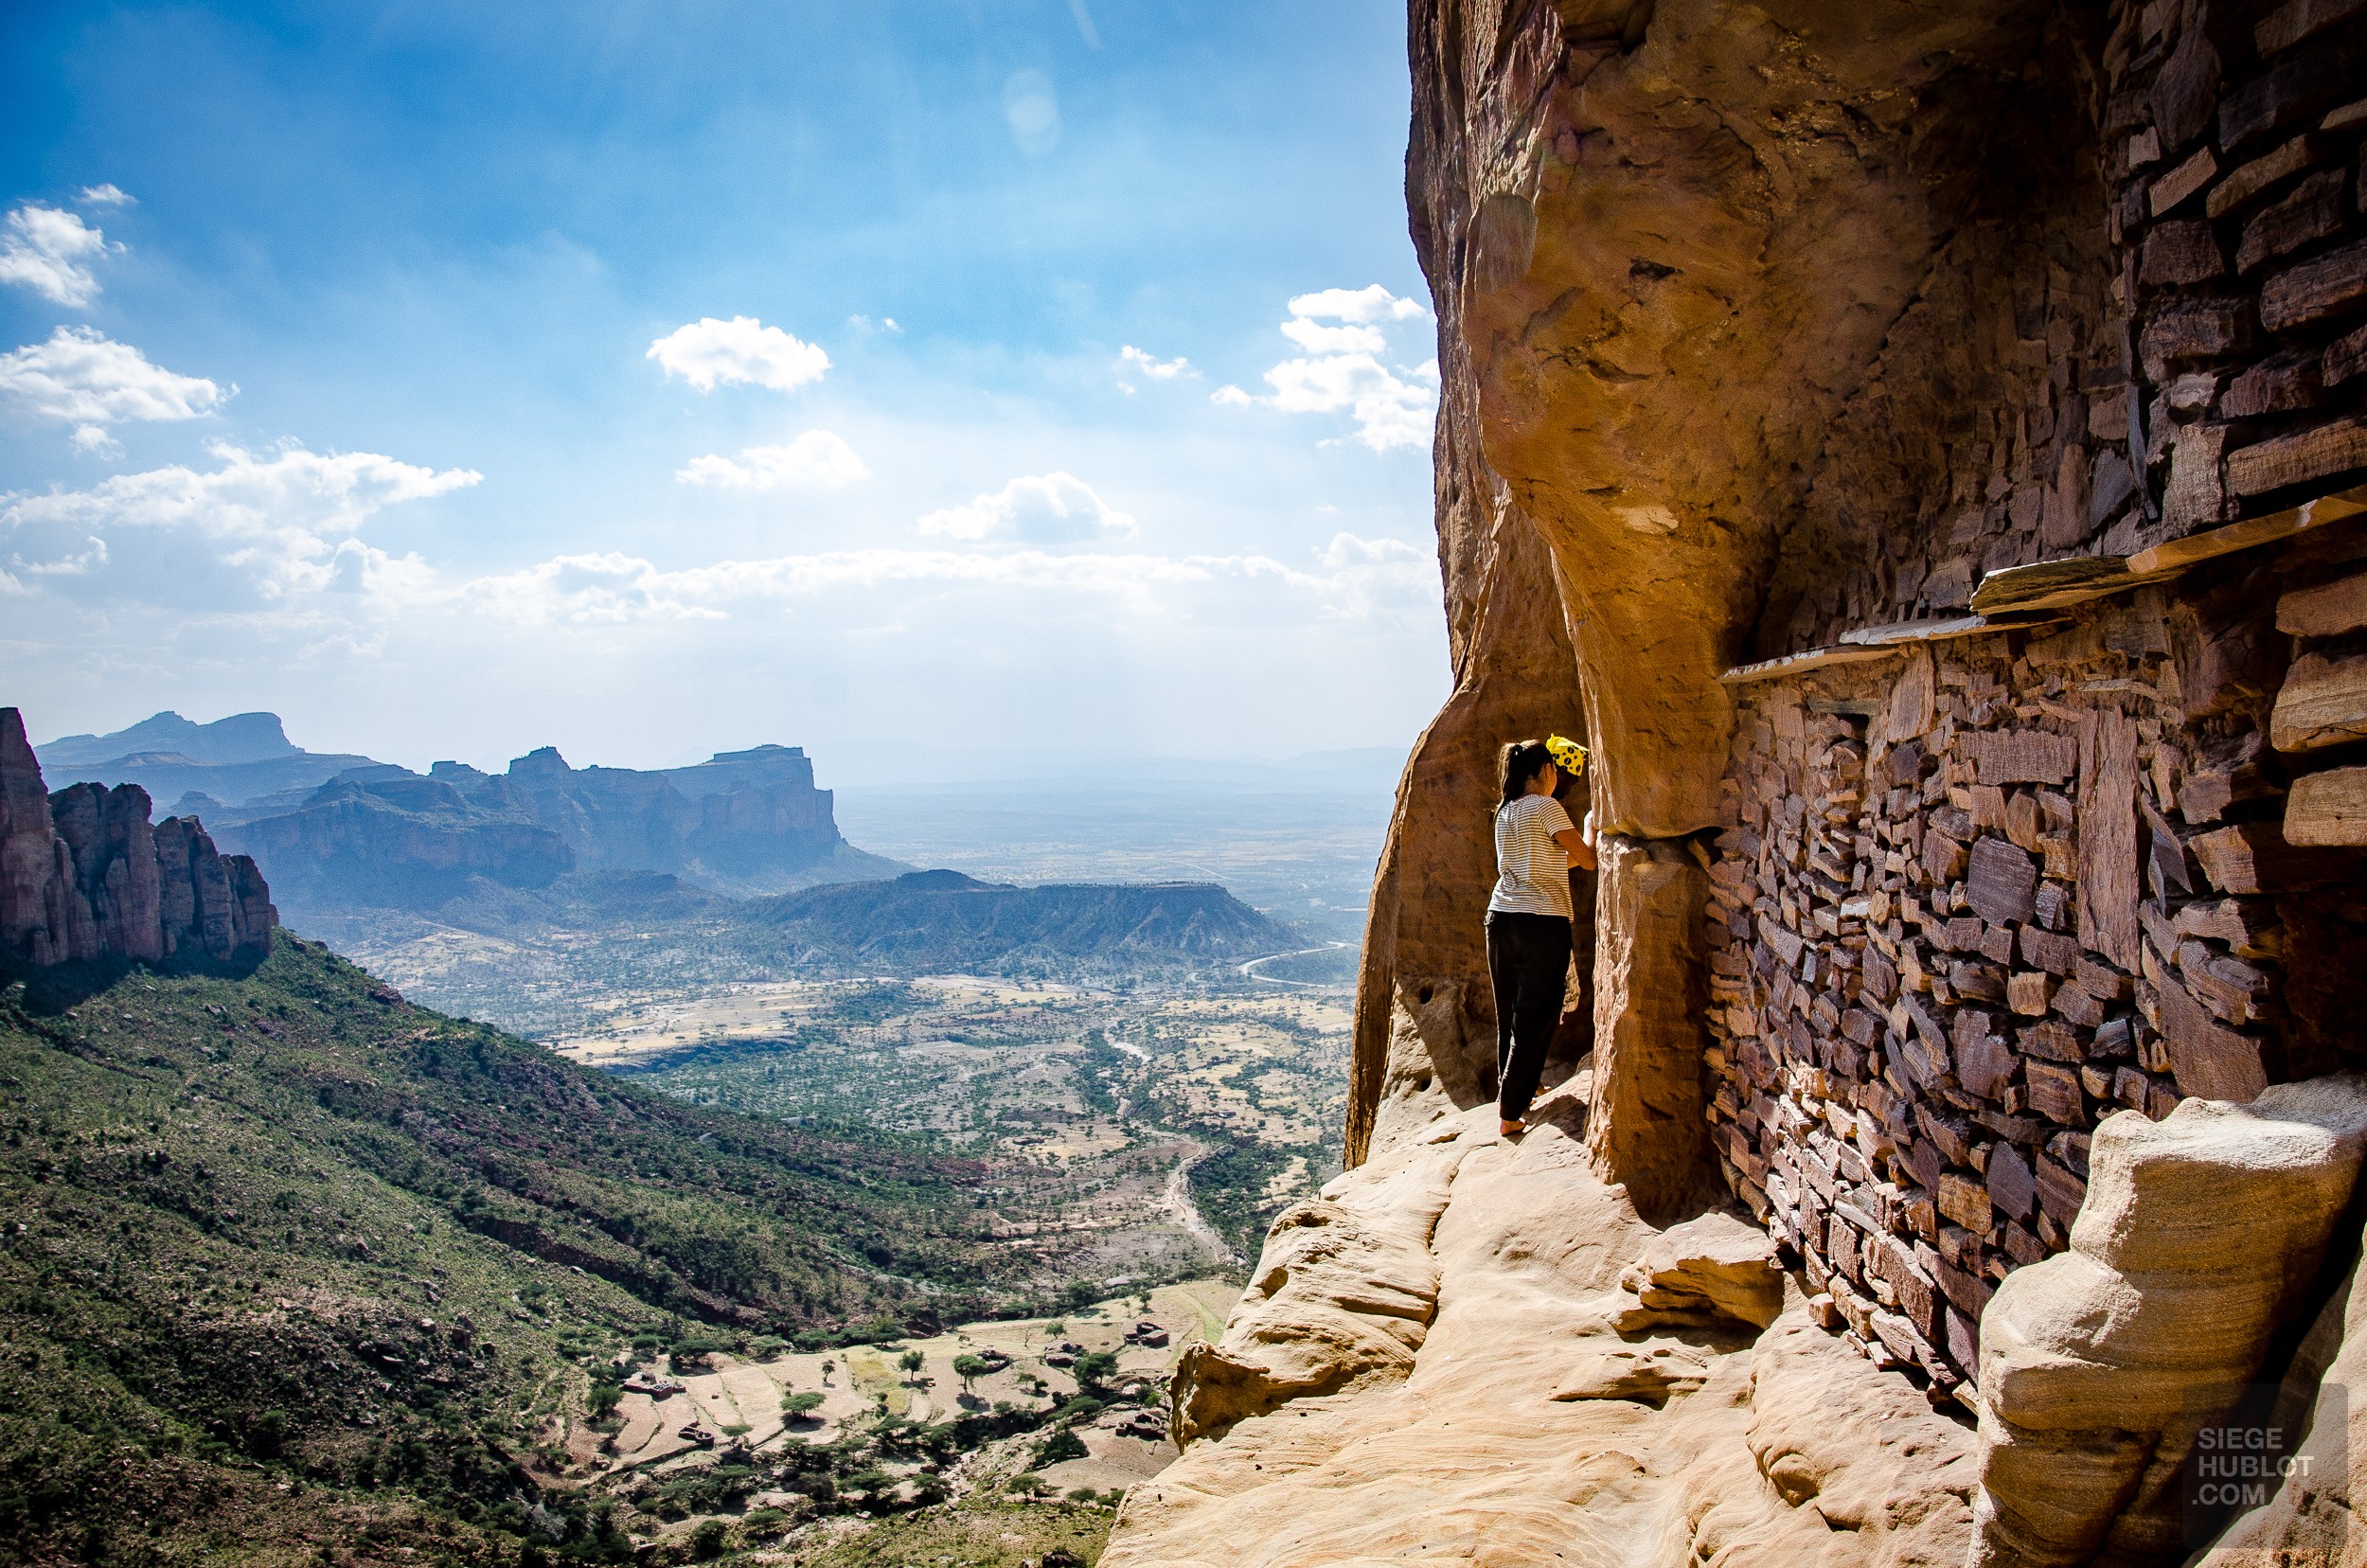 Abunah Yemata falaise - Des eglise uniques au monde, ethiopie - afrique, ethiopie